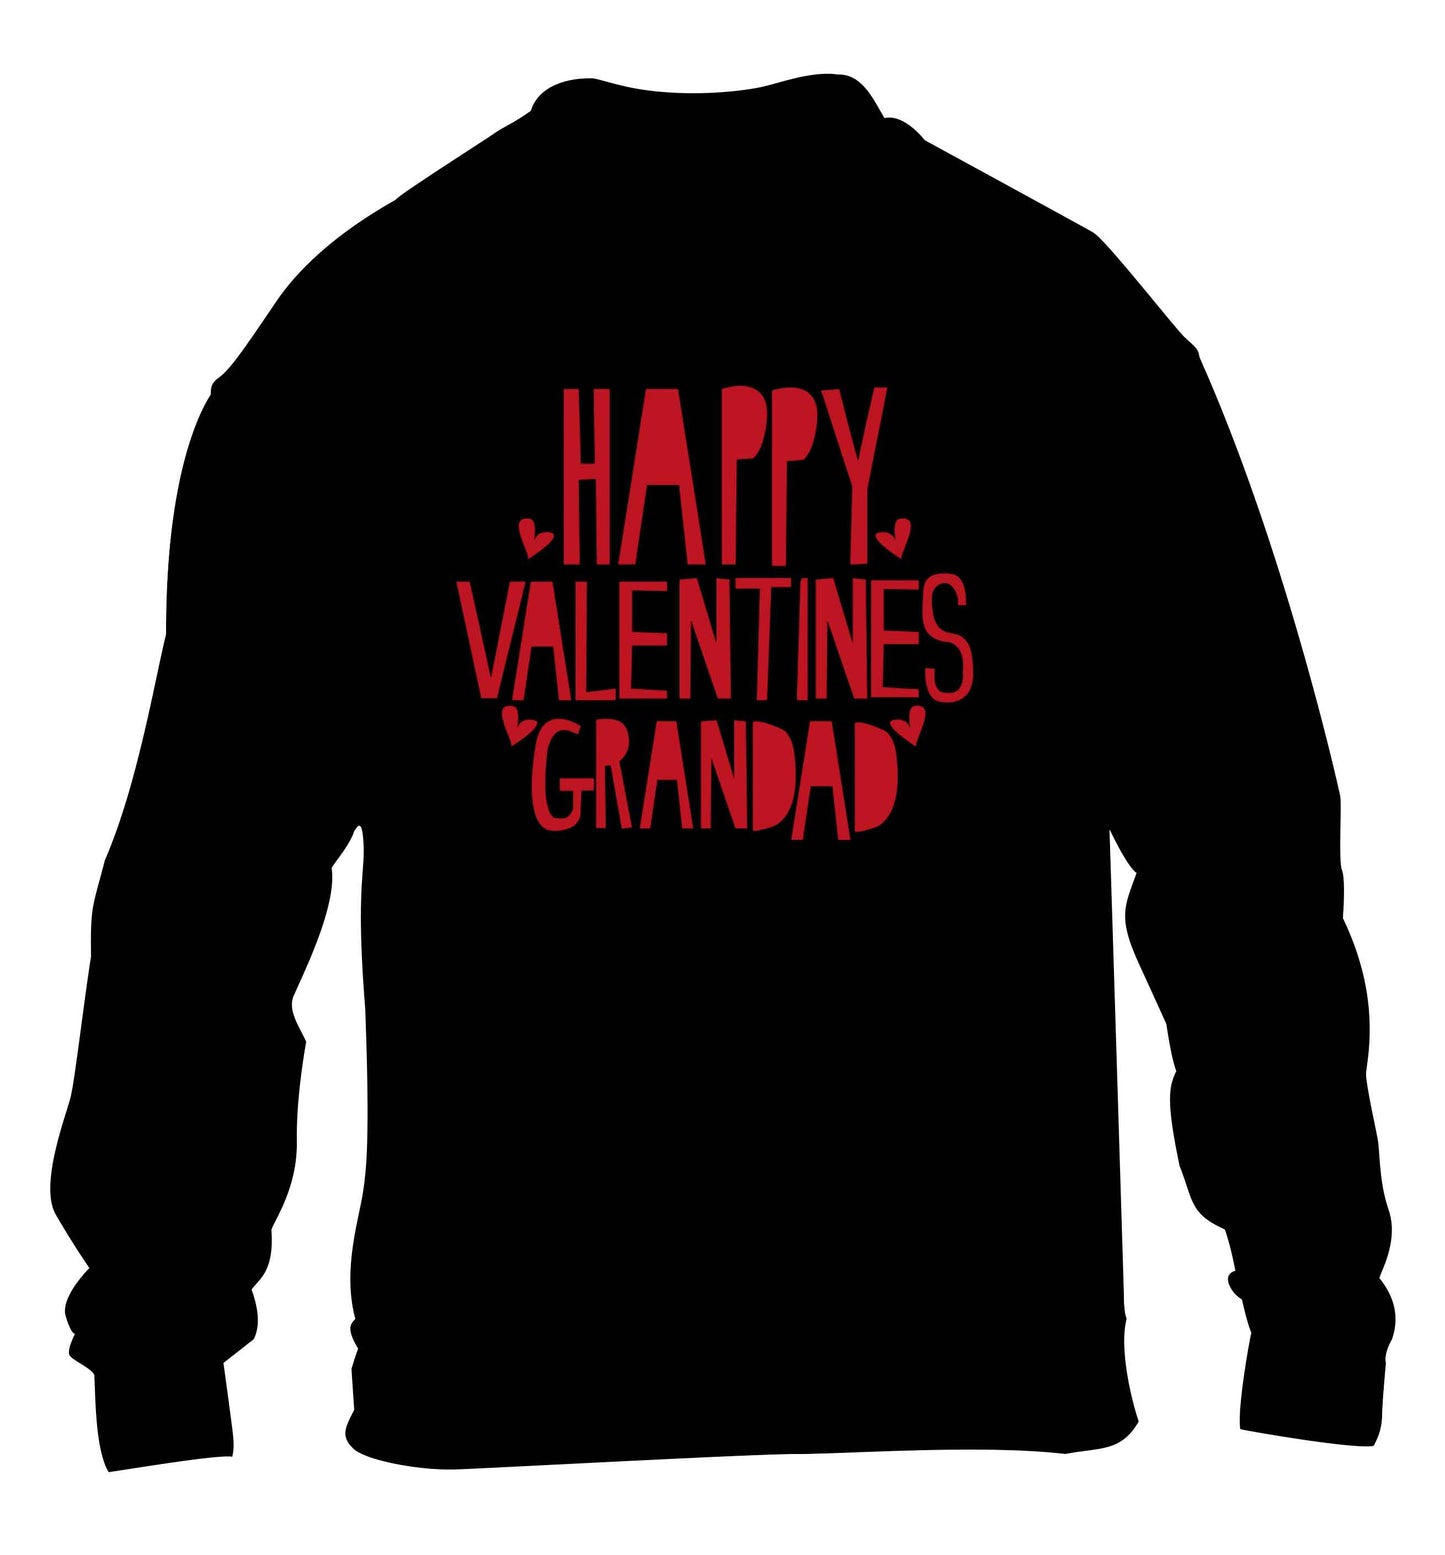 Happy valentines grandad children's black sweater 12-13 Years